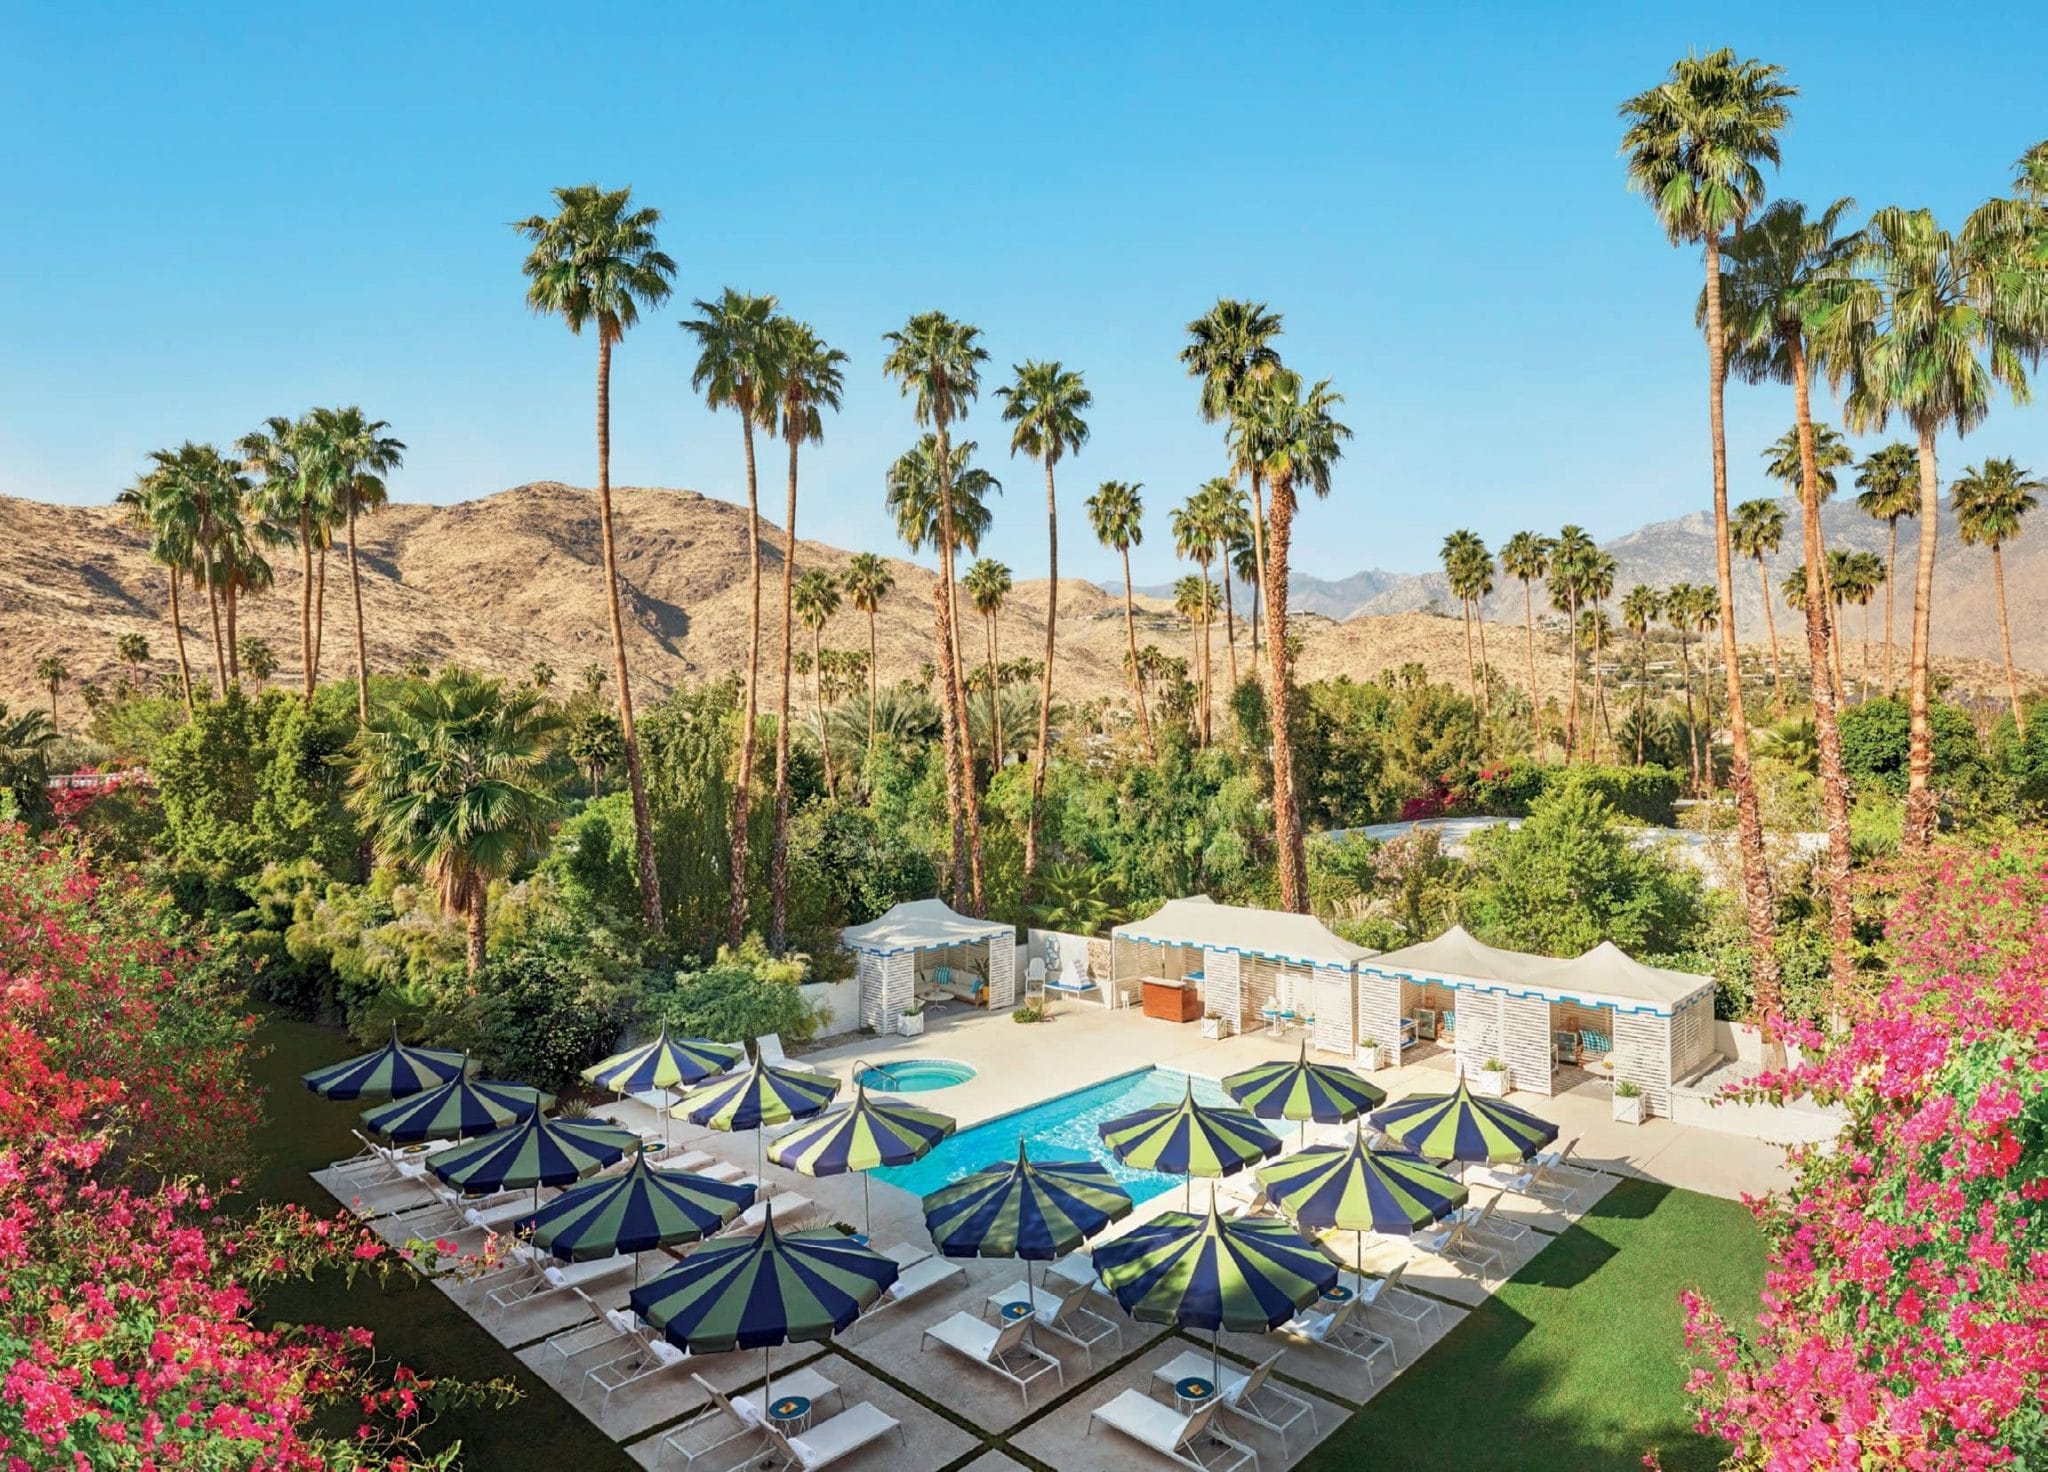 Parker Hotel Palm Springs California CELLOPHANELAND*